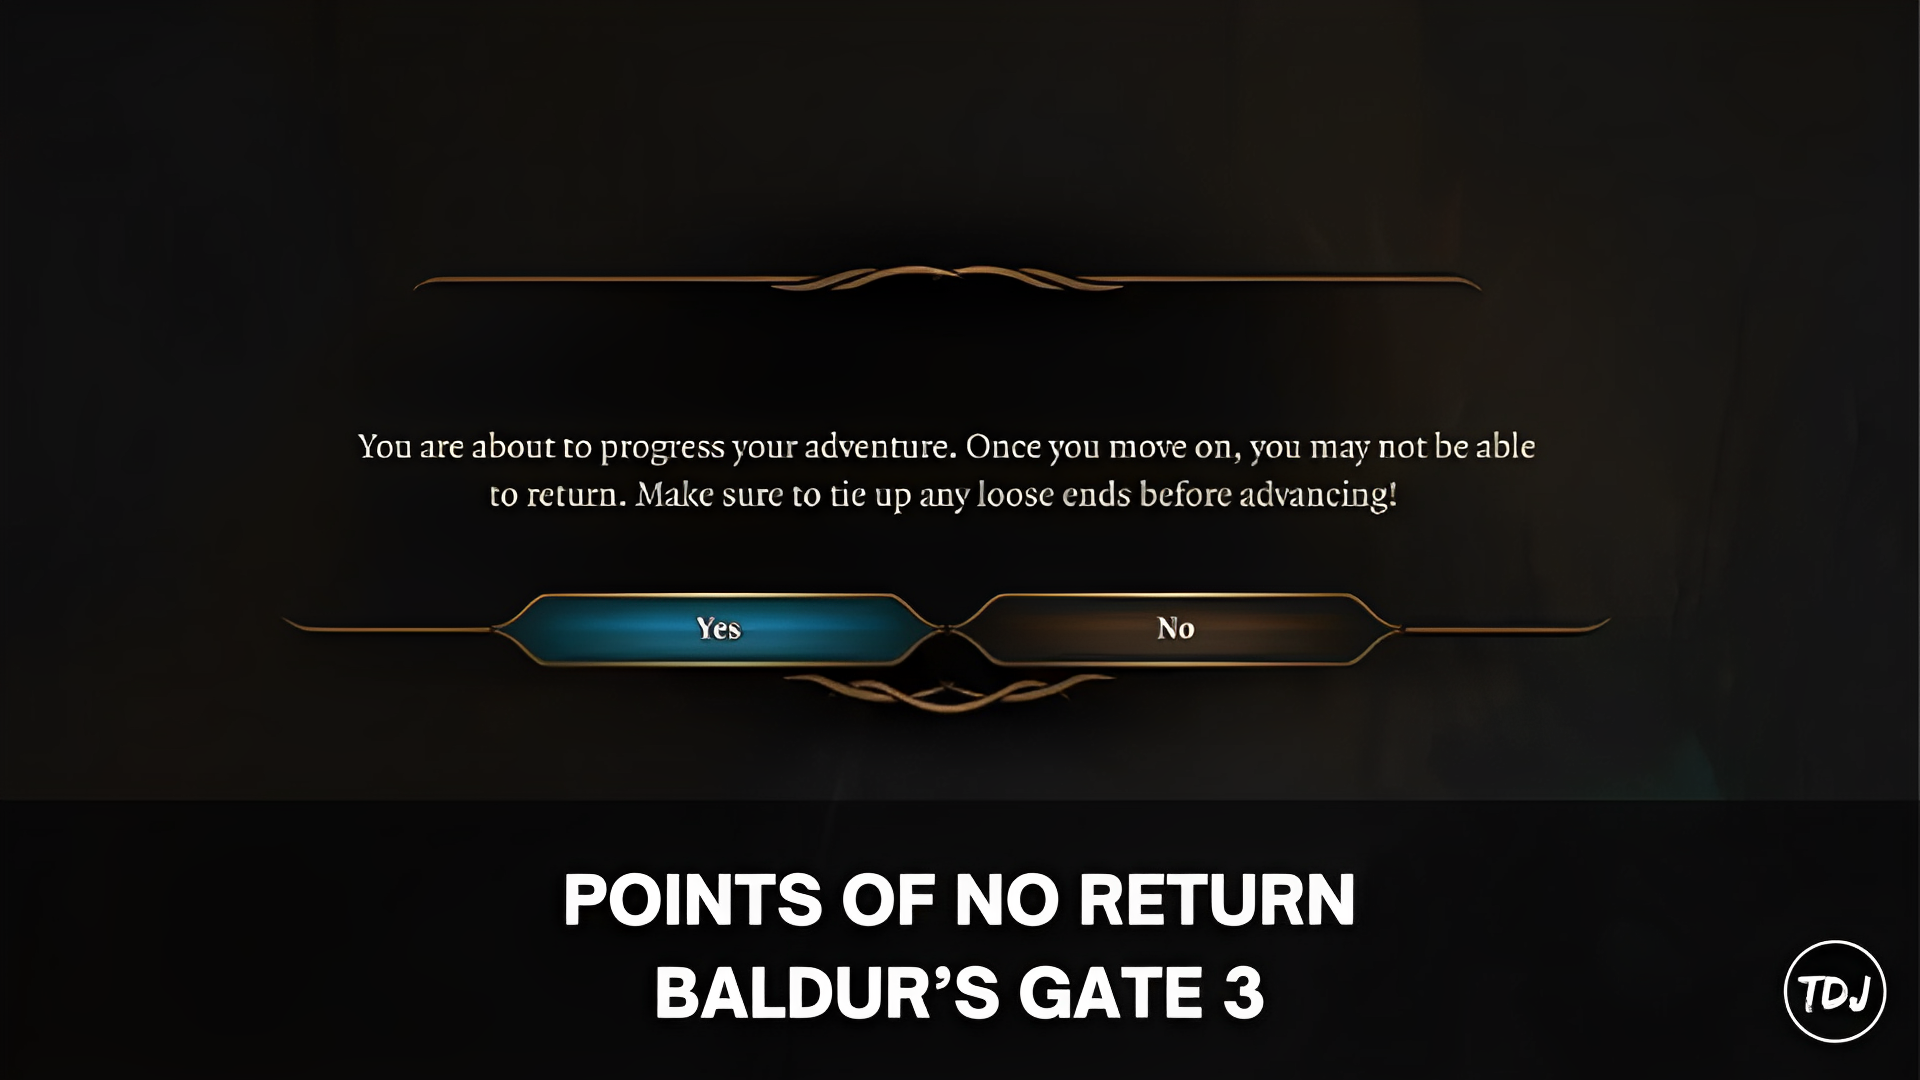 baldur's gate 3 point of no return